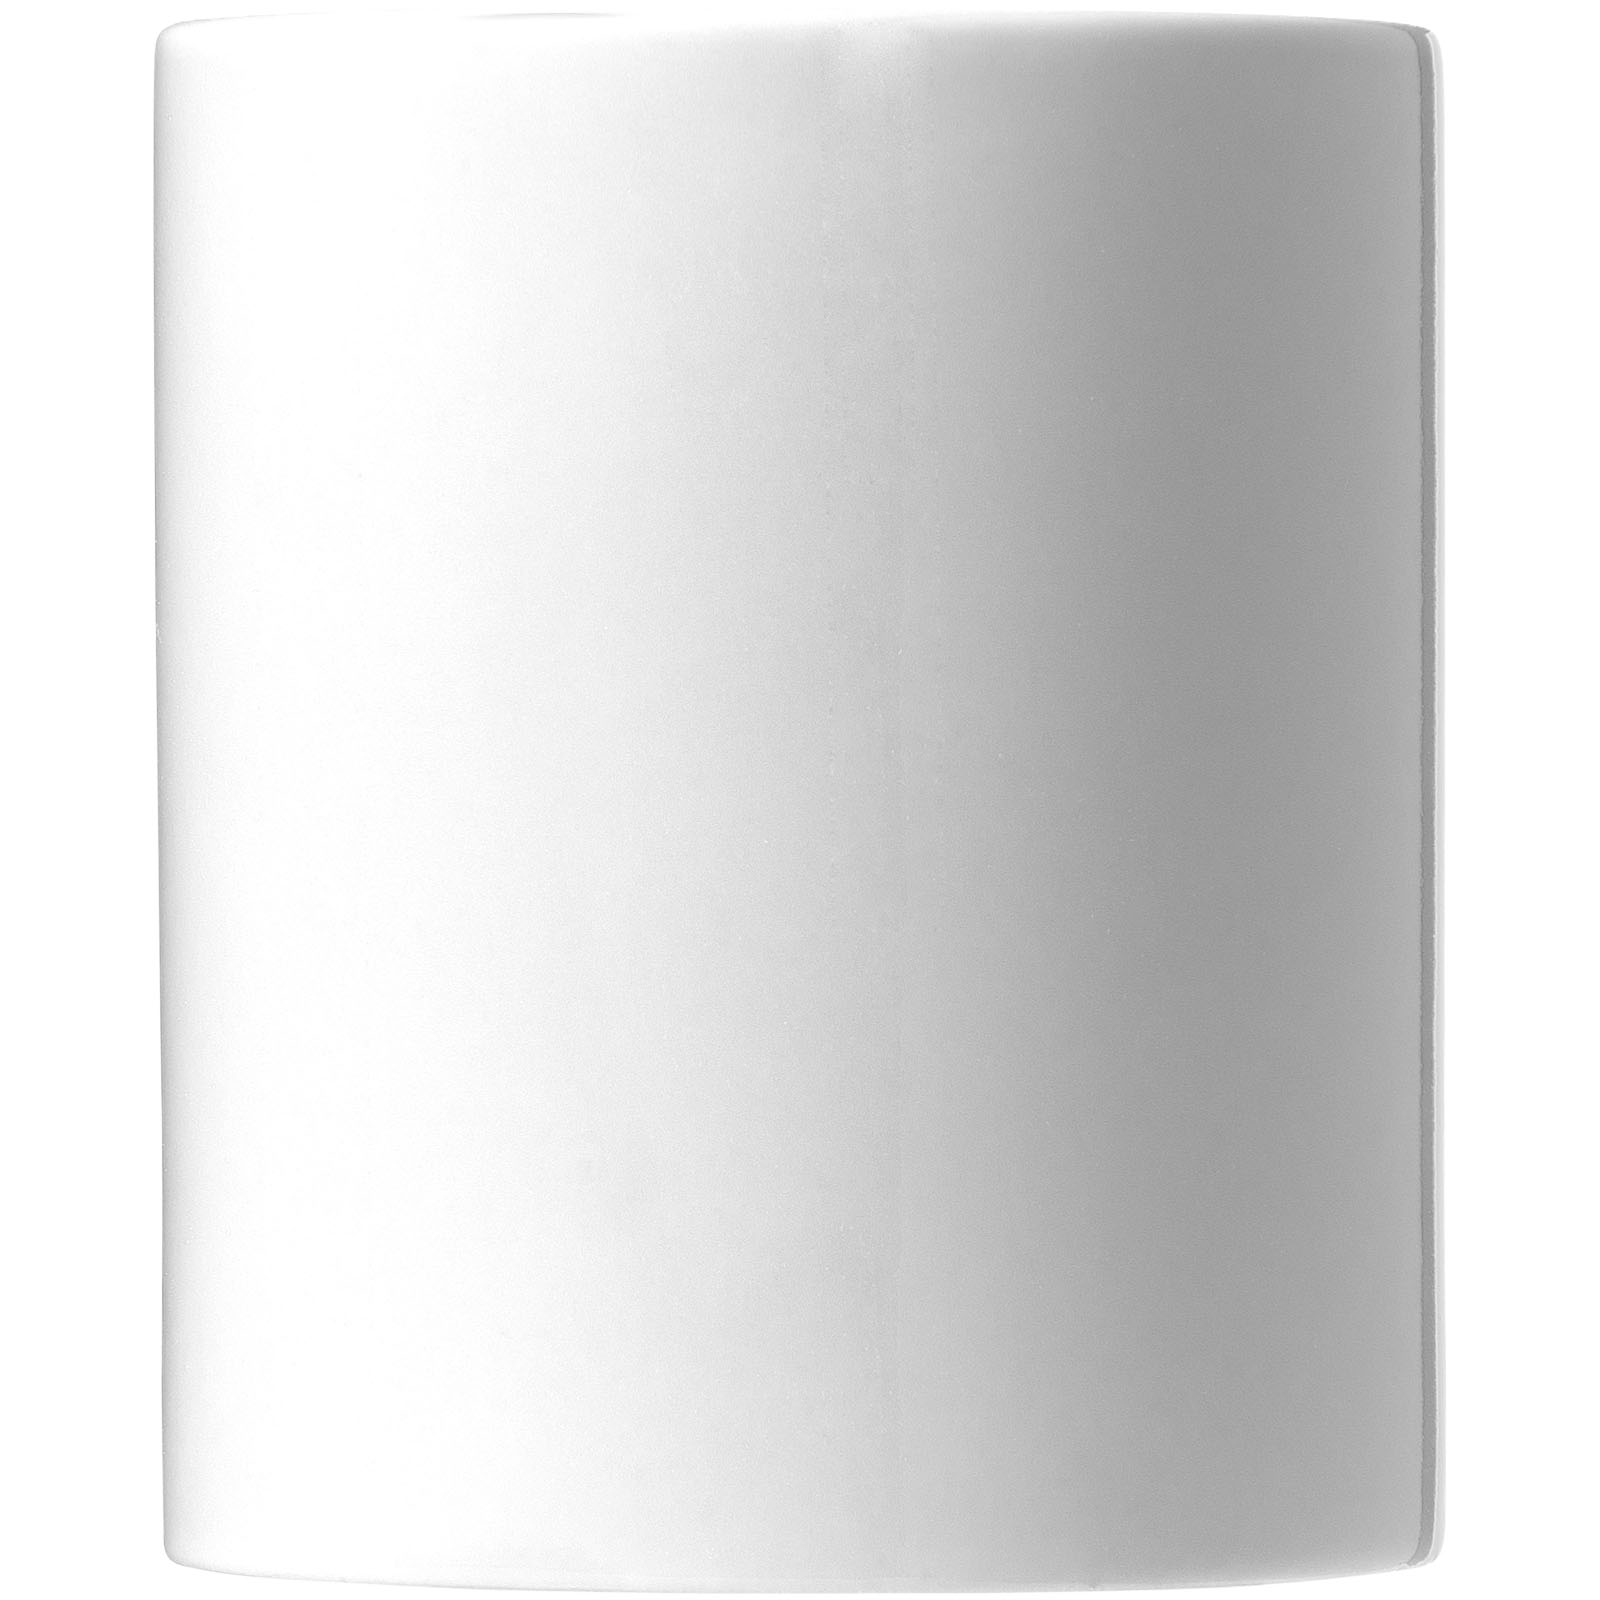 Advertising Standard mugs - Pic 330 ml ceramic sublimation mug - 2